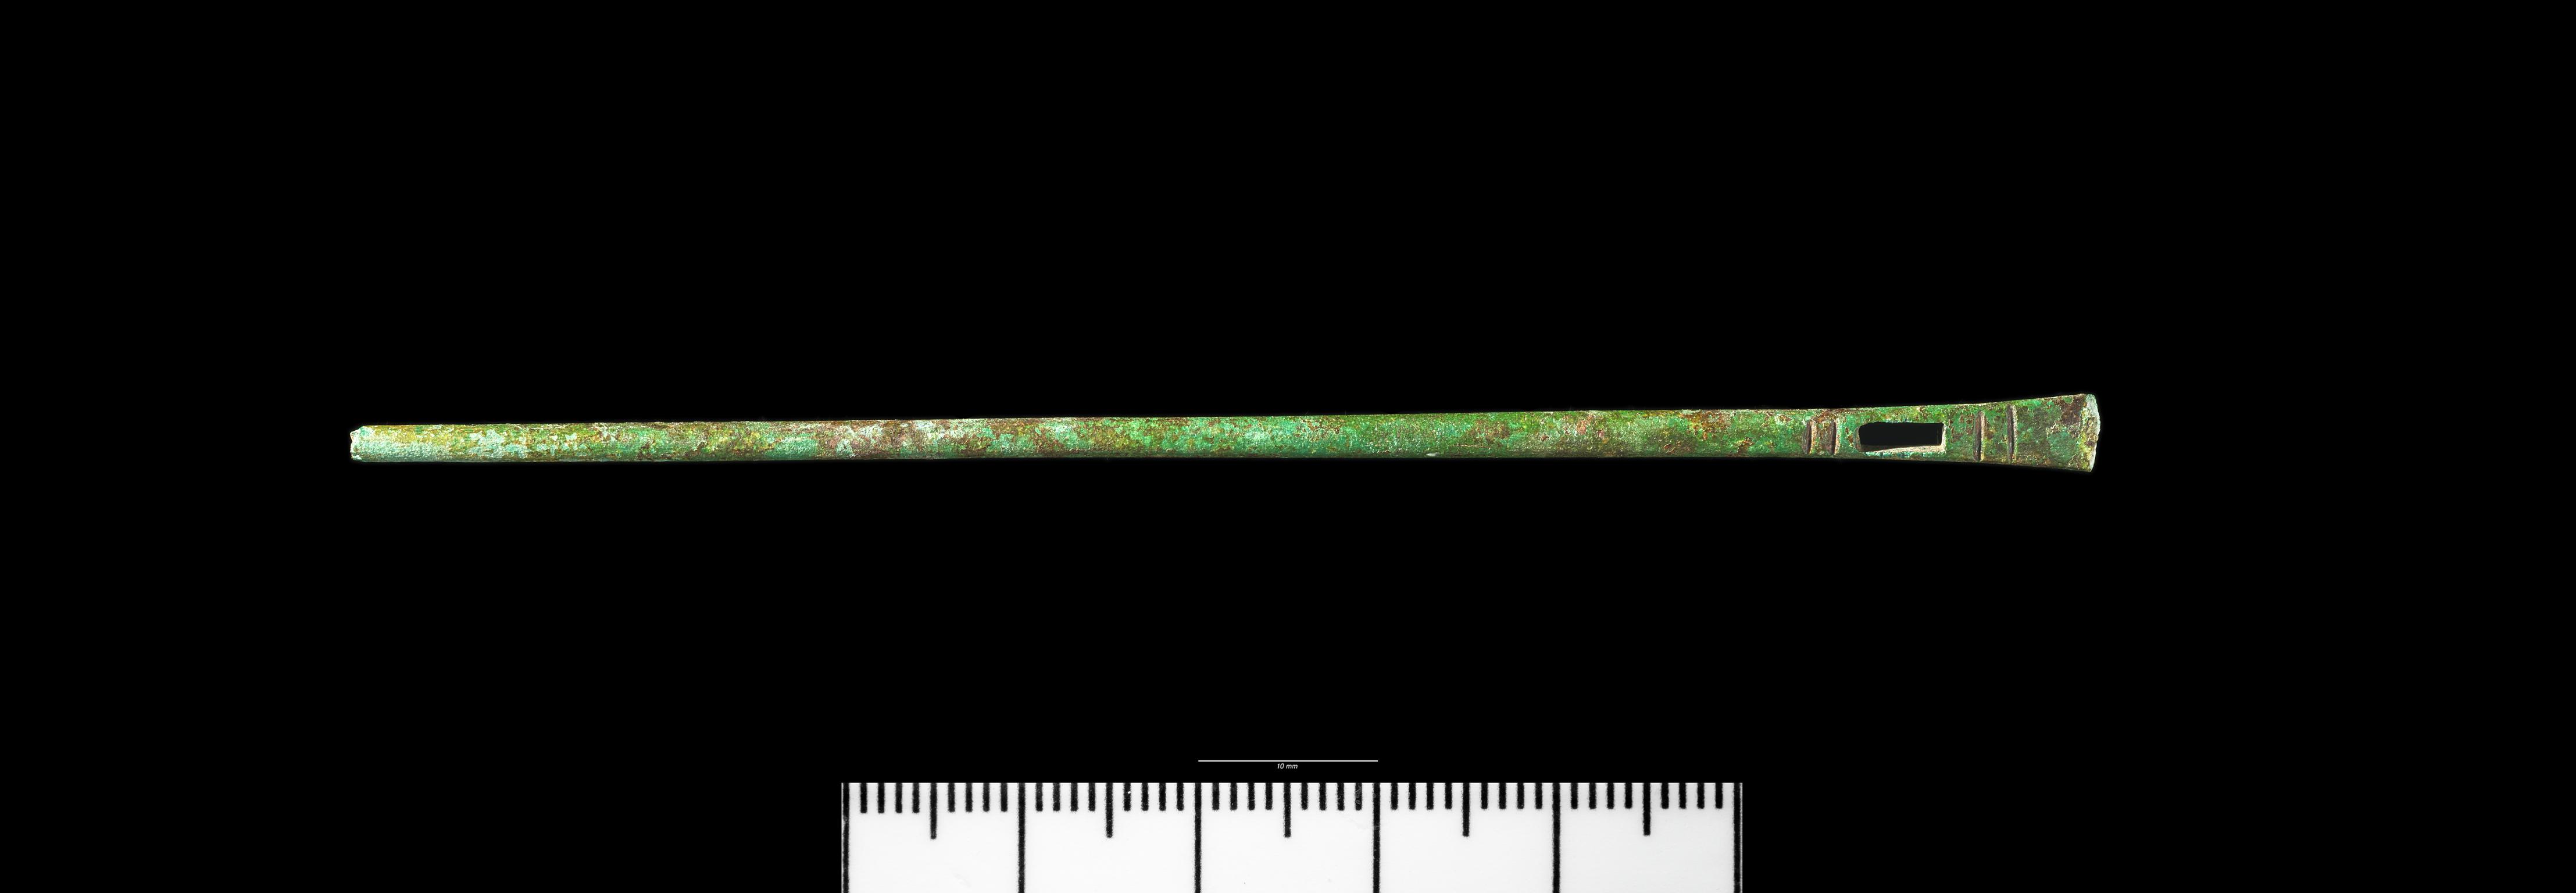 Roman copper alloy needle